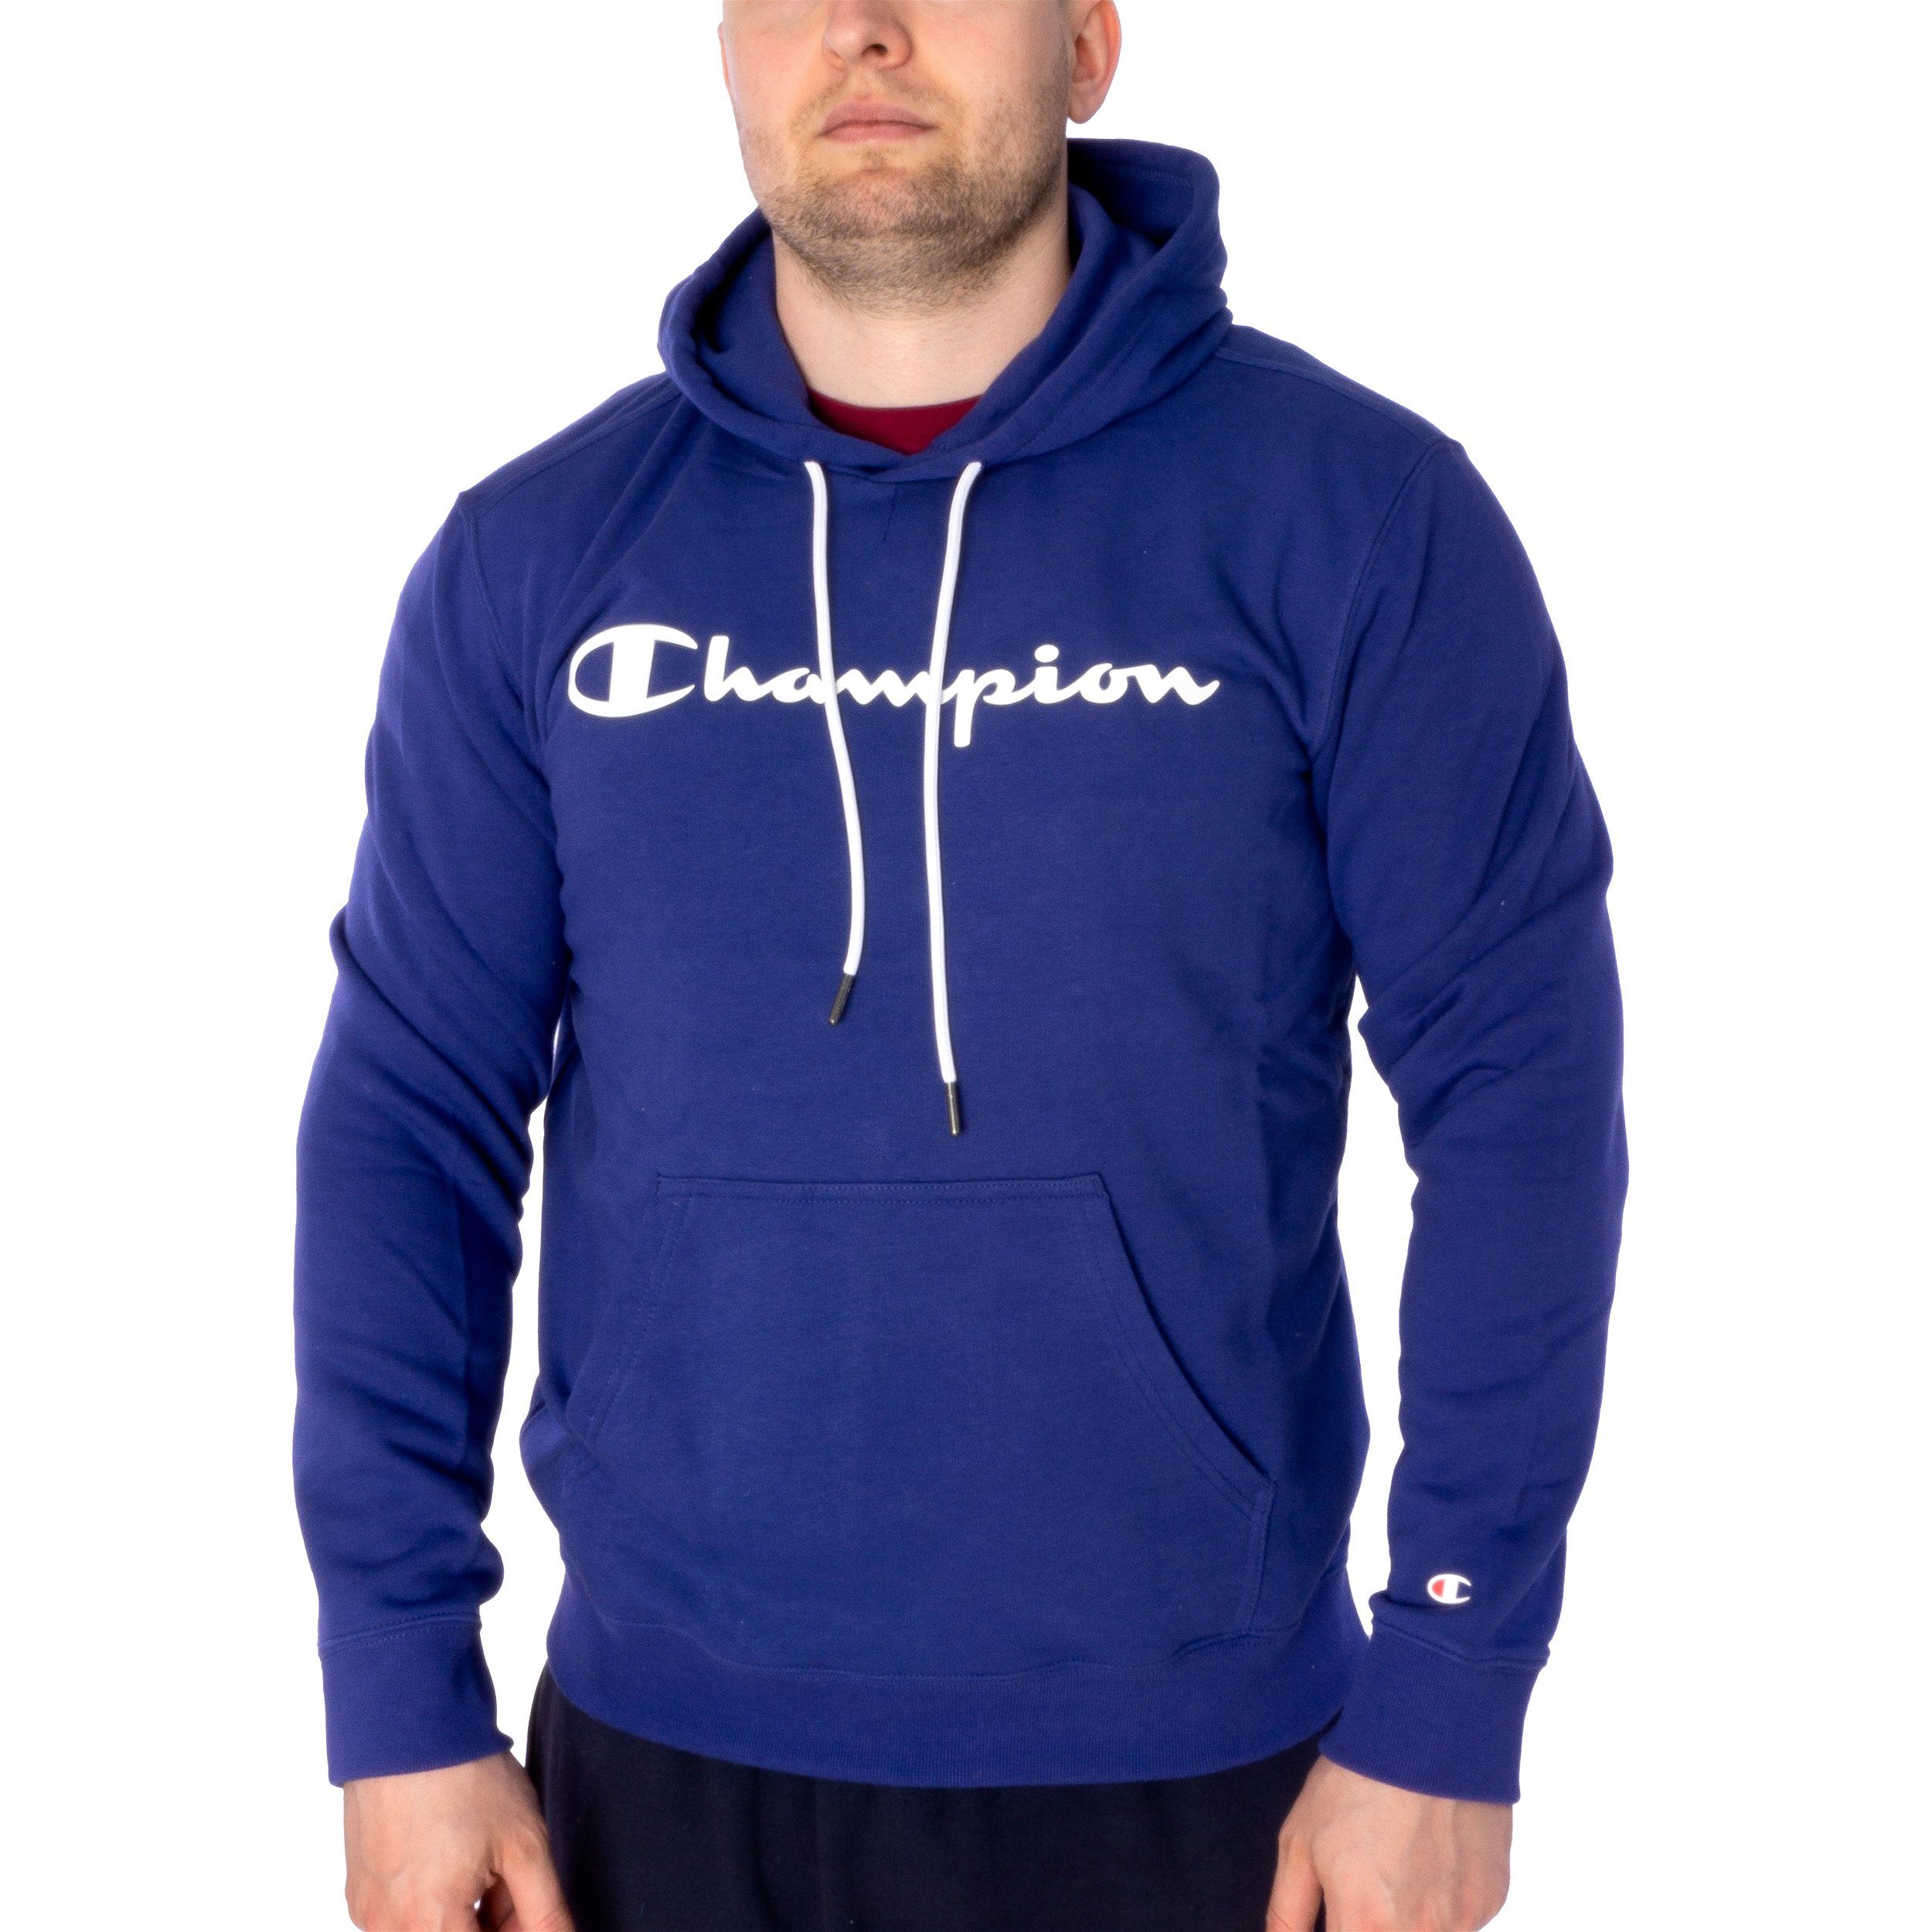 Champion Kapuzenpullover Hooded Herren online kaufen | OTTO